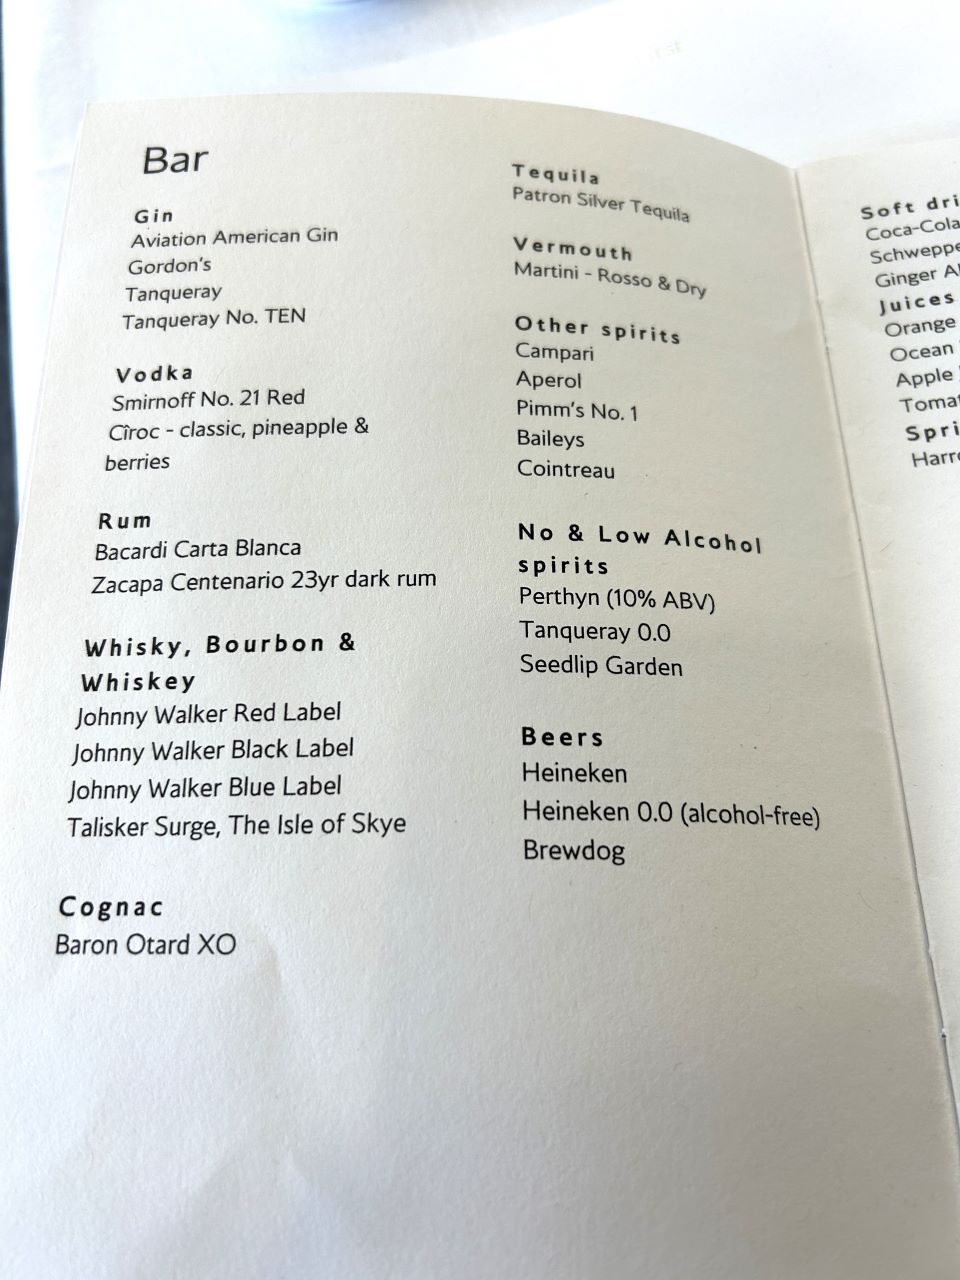 British Airways First Class Dining Bar Menu